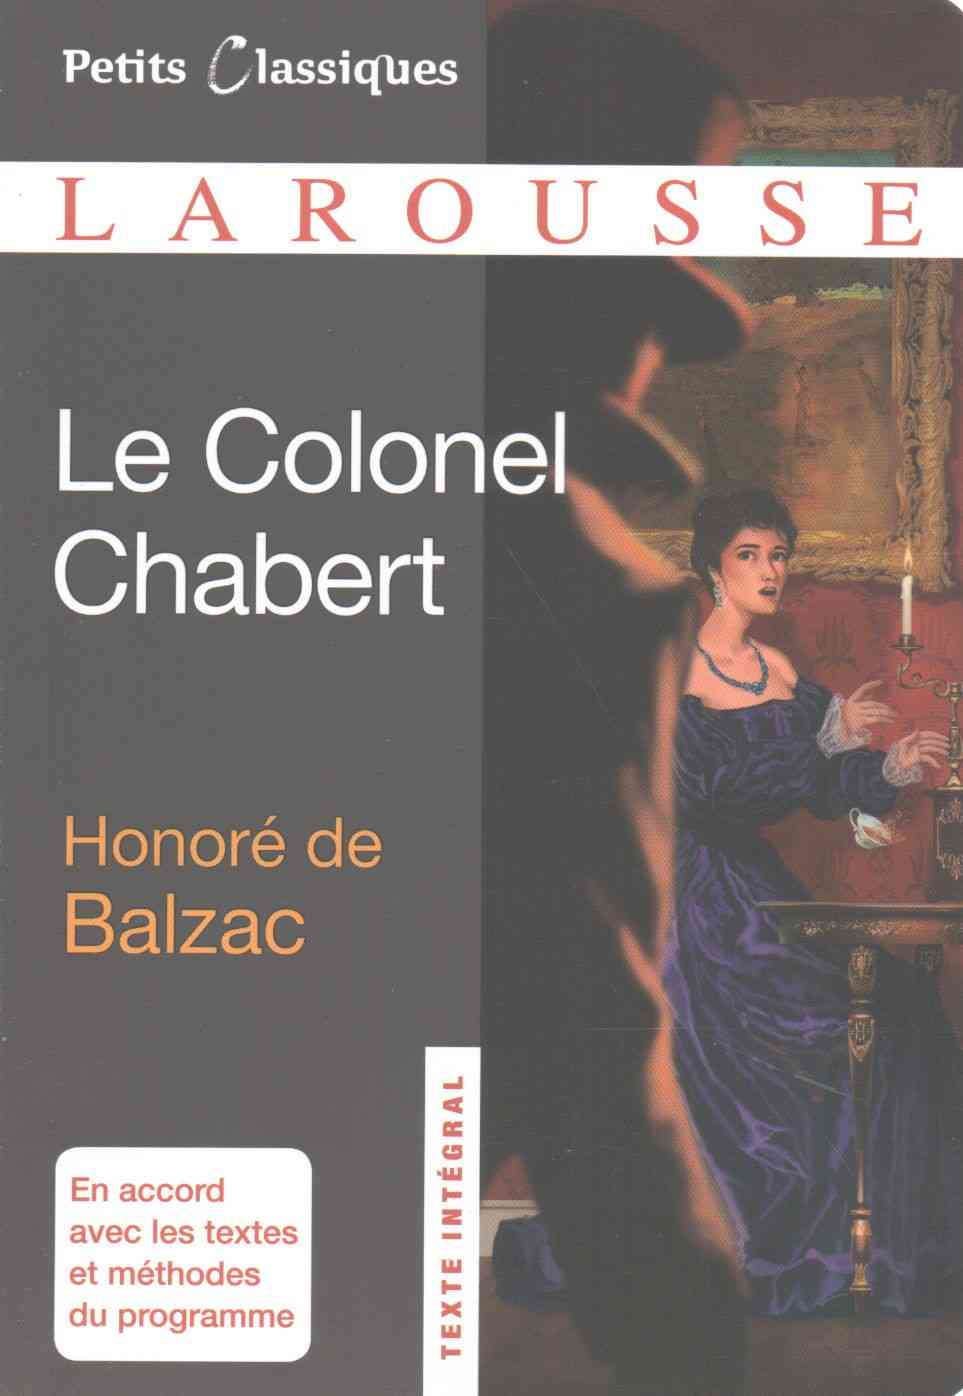 Book Le colonel Chabert Honoré de Balzac